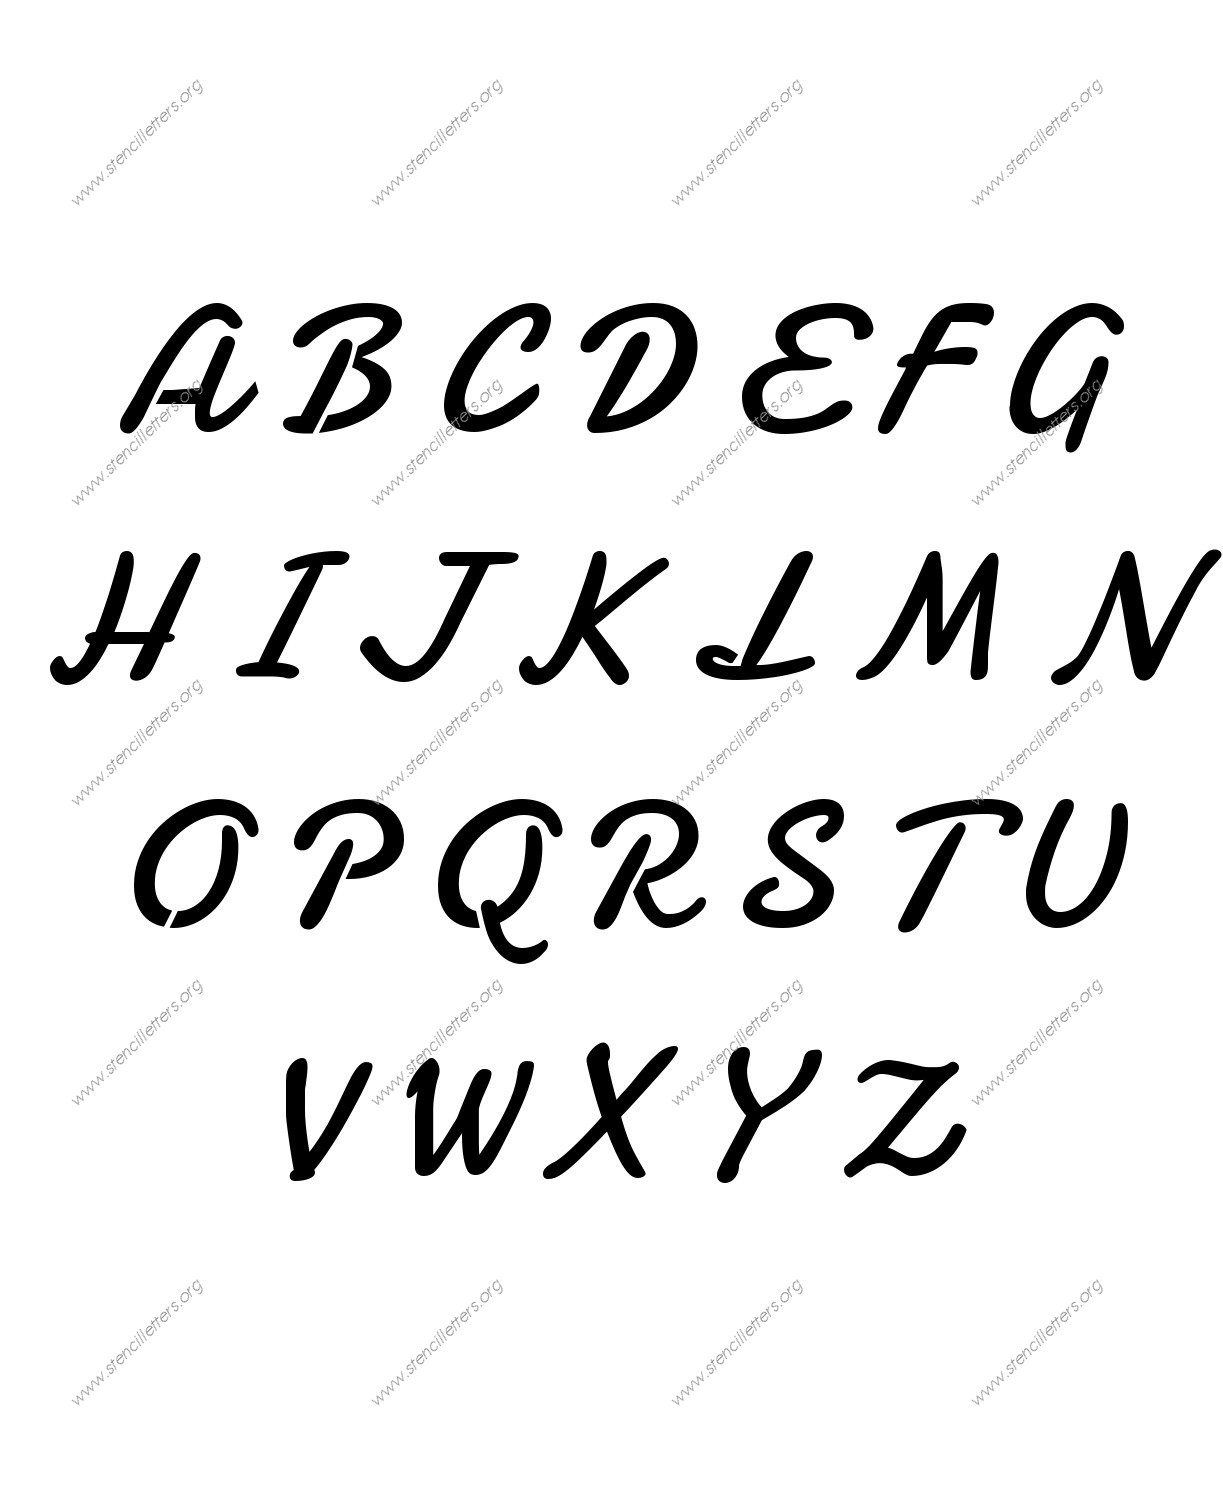 Display Script Cursive custom stencil letters